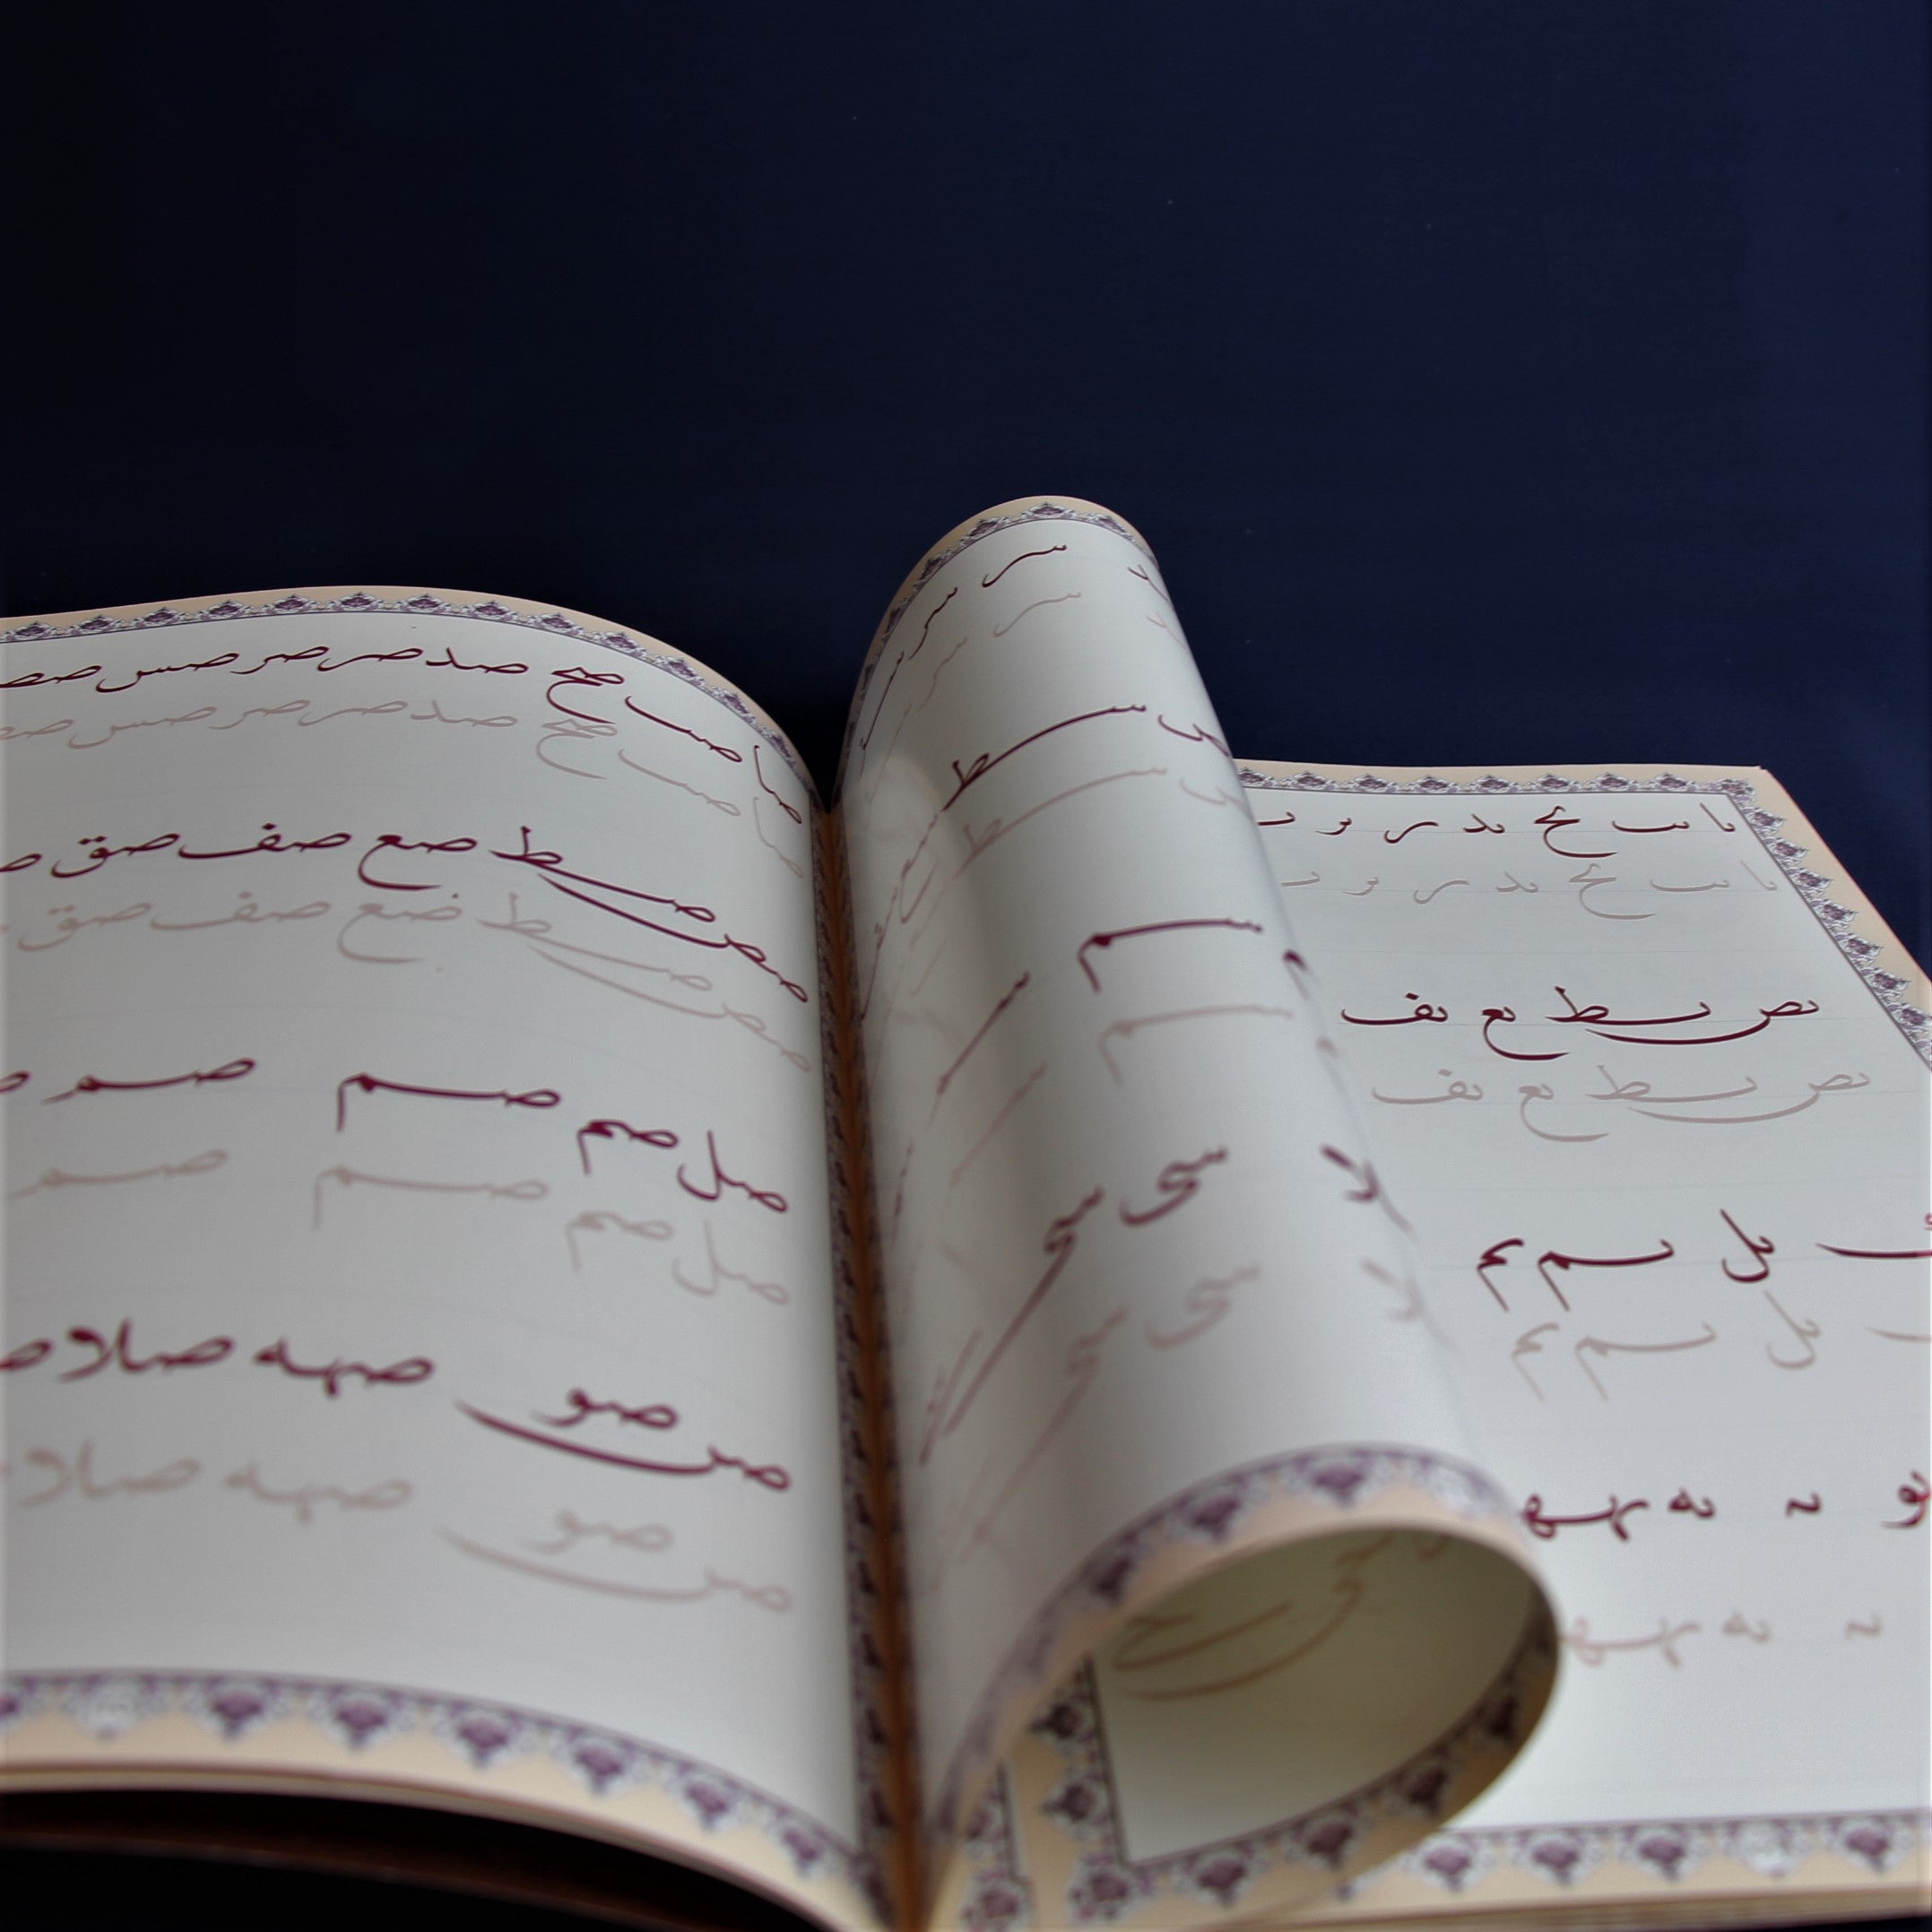 Arabic calligraphy workbook for Naskh script - based on work of Mukhtar 'Alam 